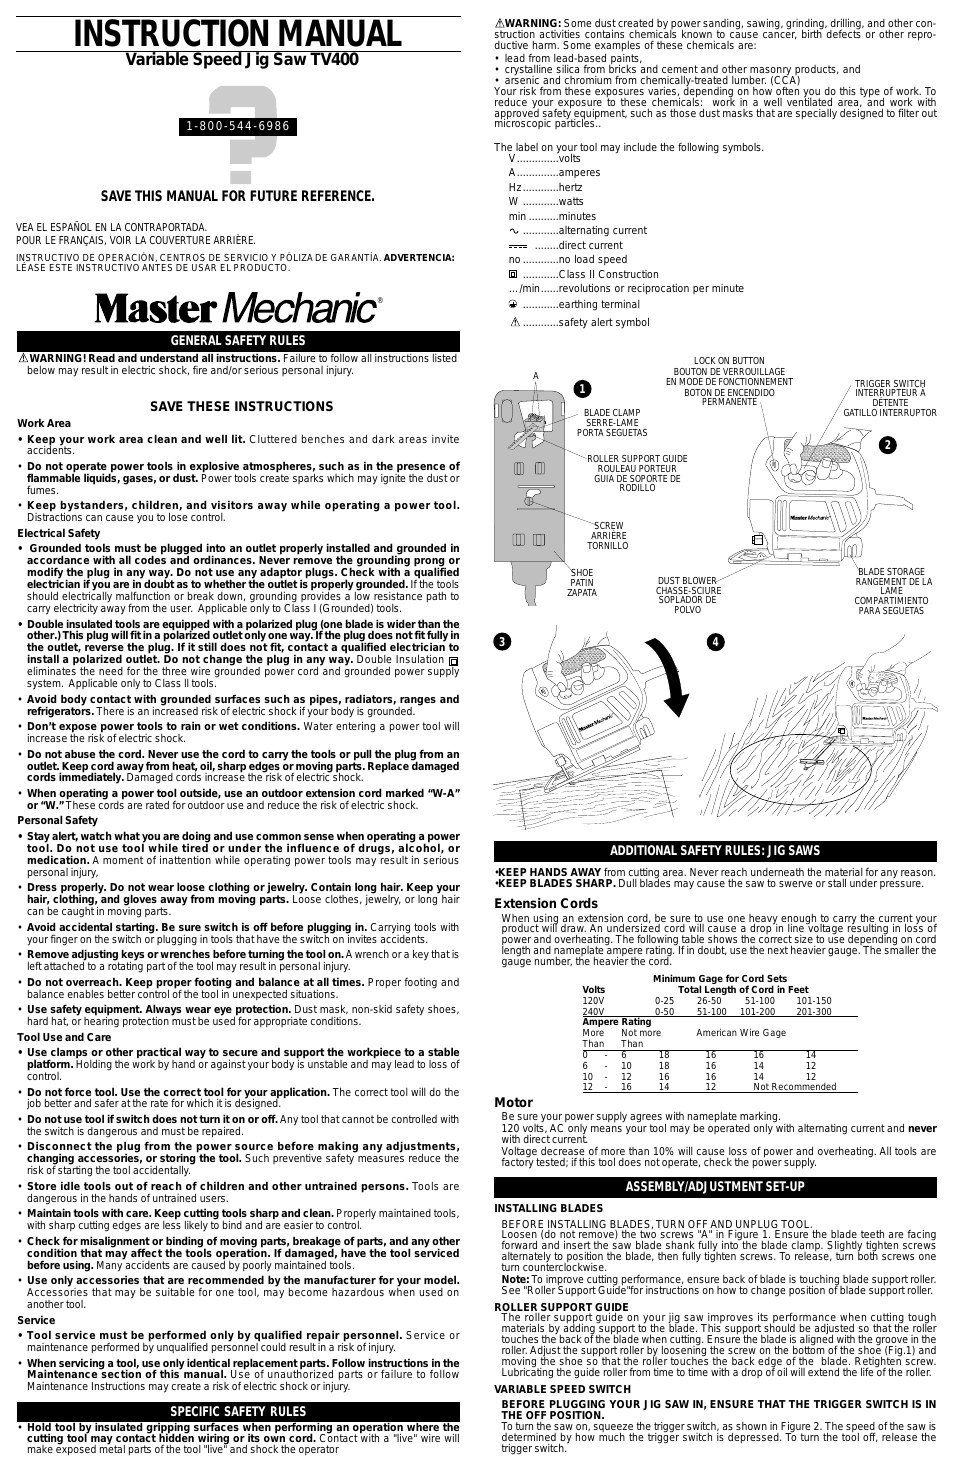 Master Mechanic 389995-00